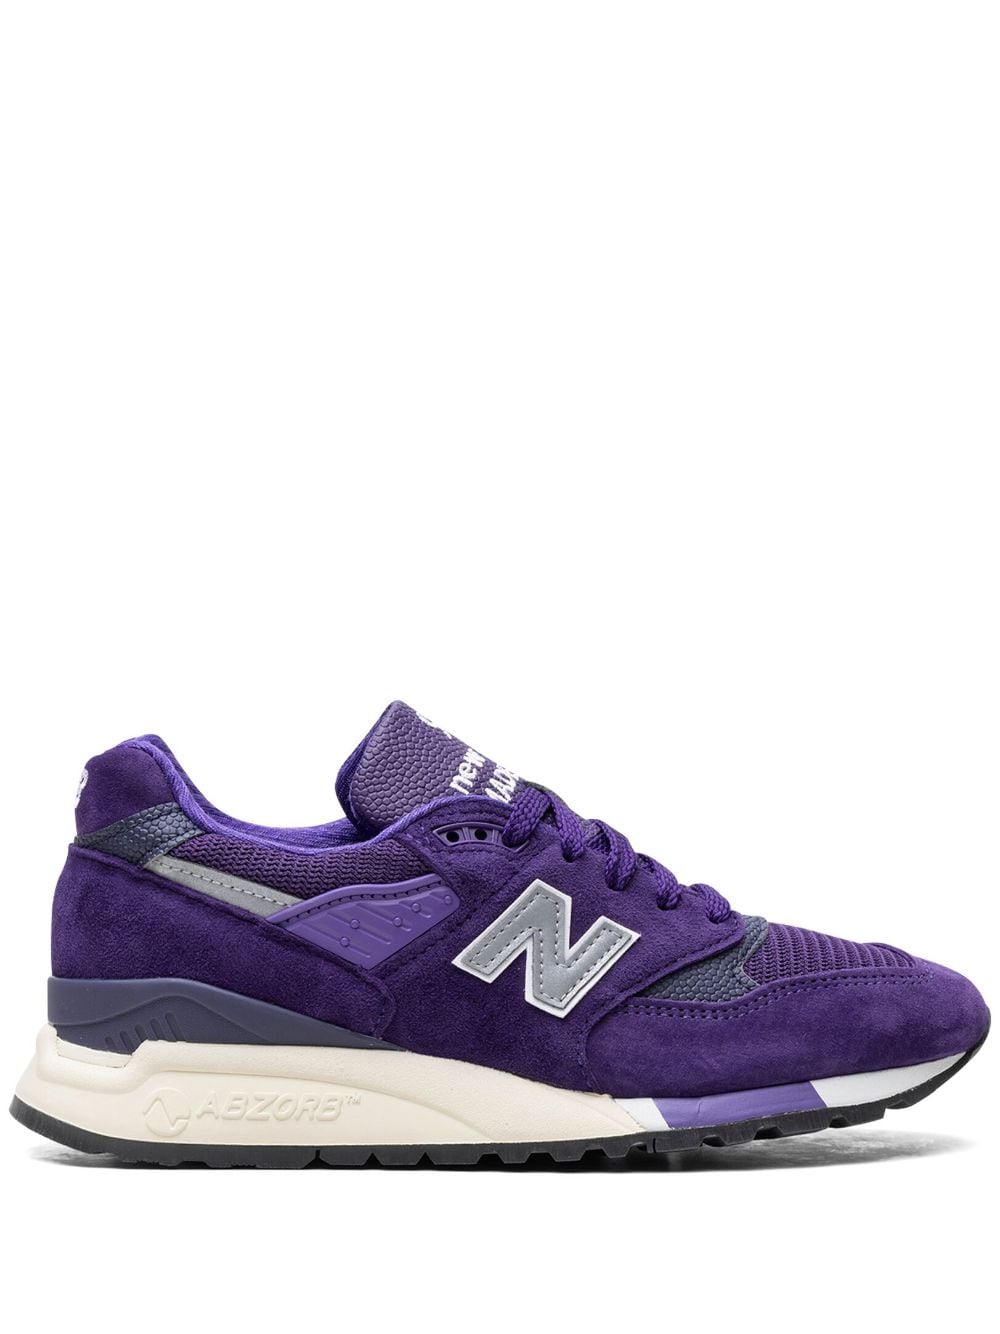 New Balance Made in USA 998 "Purple" sneakers von New Balance